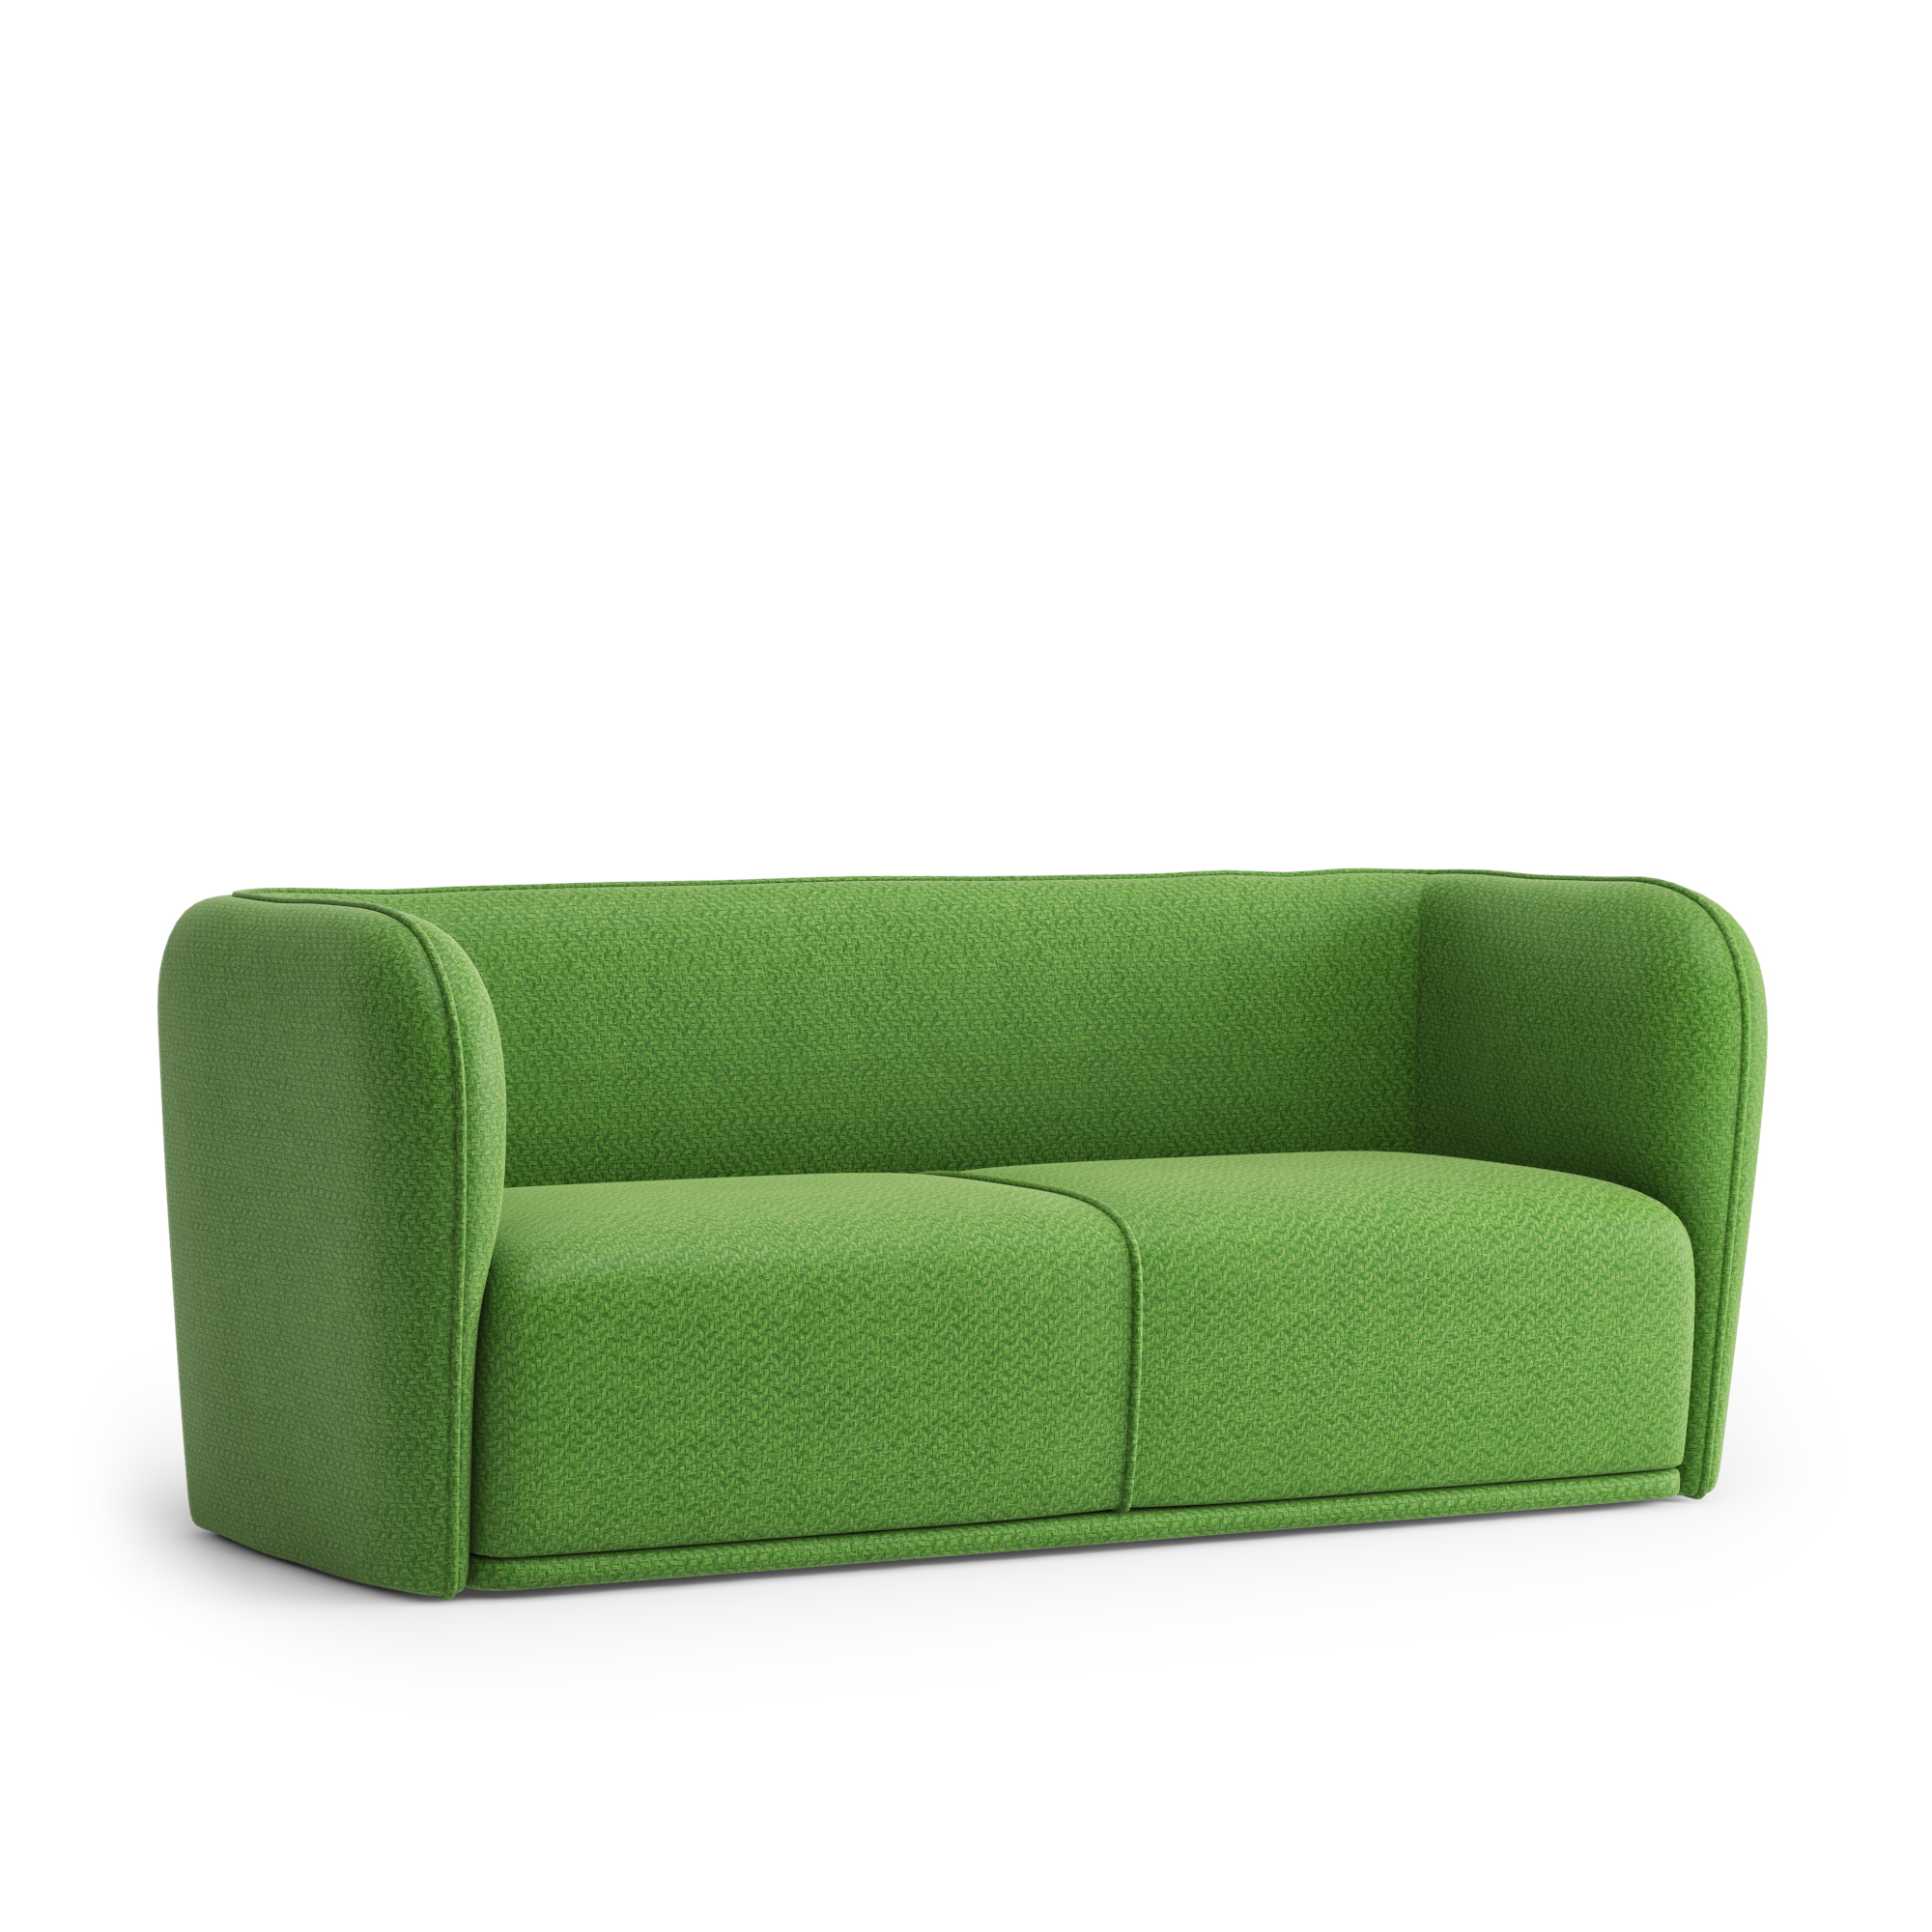 Parlor Style Sofa